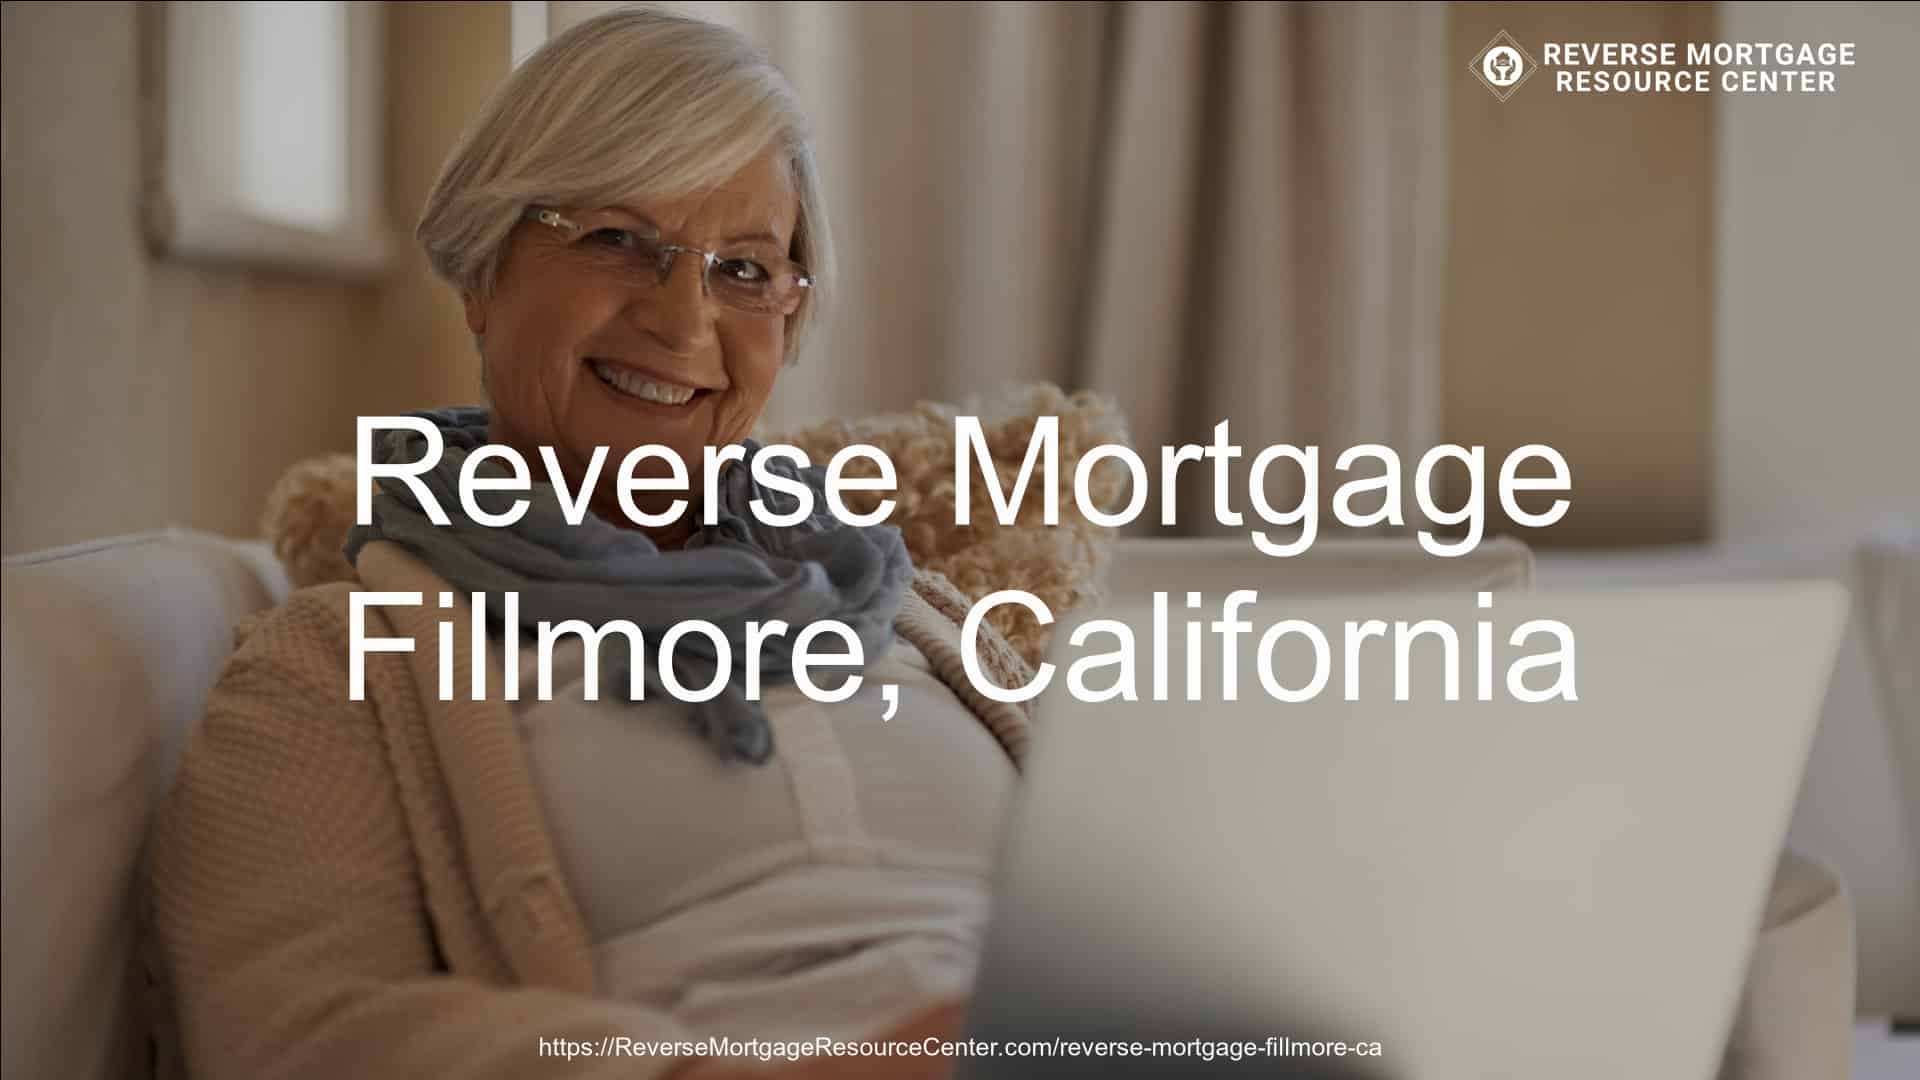 Reverse Mortgage Loans in Fillmore California